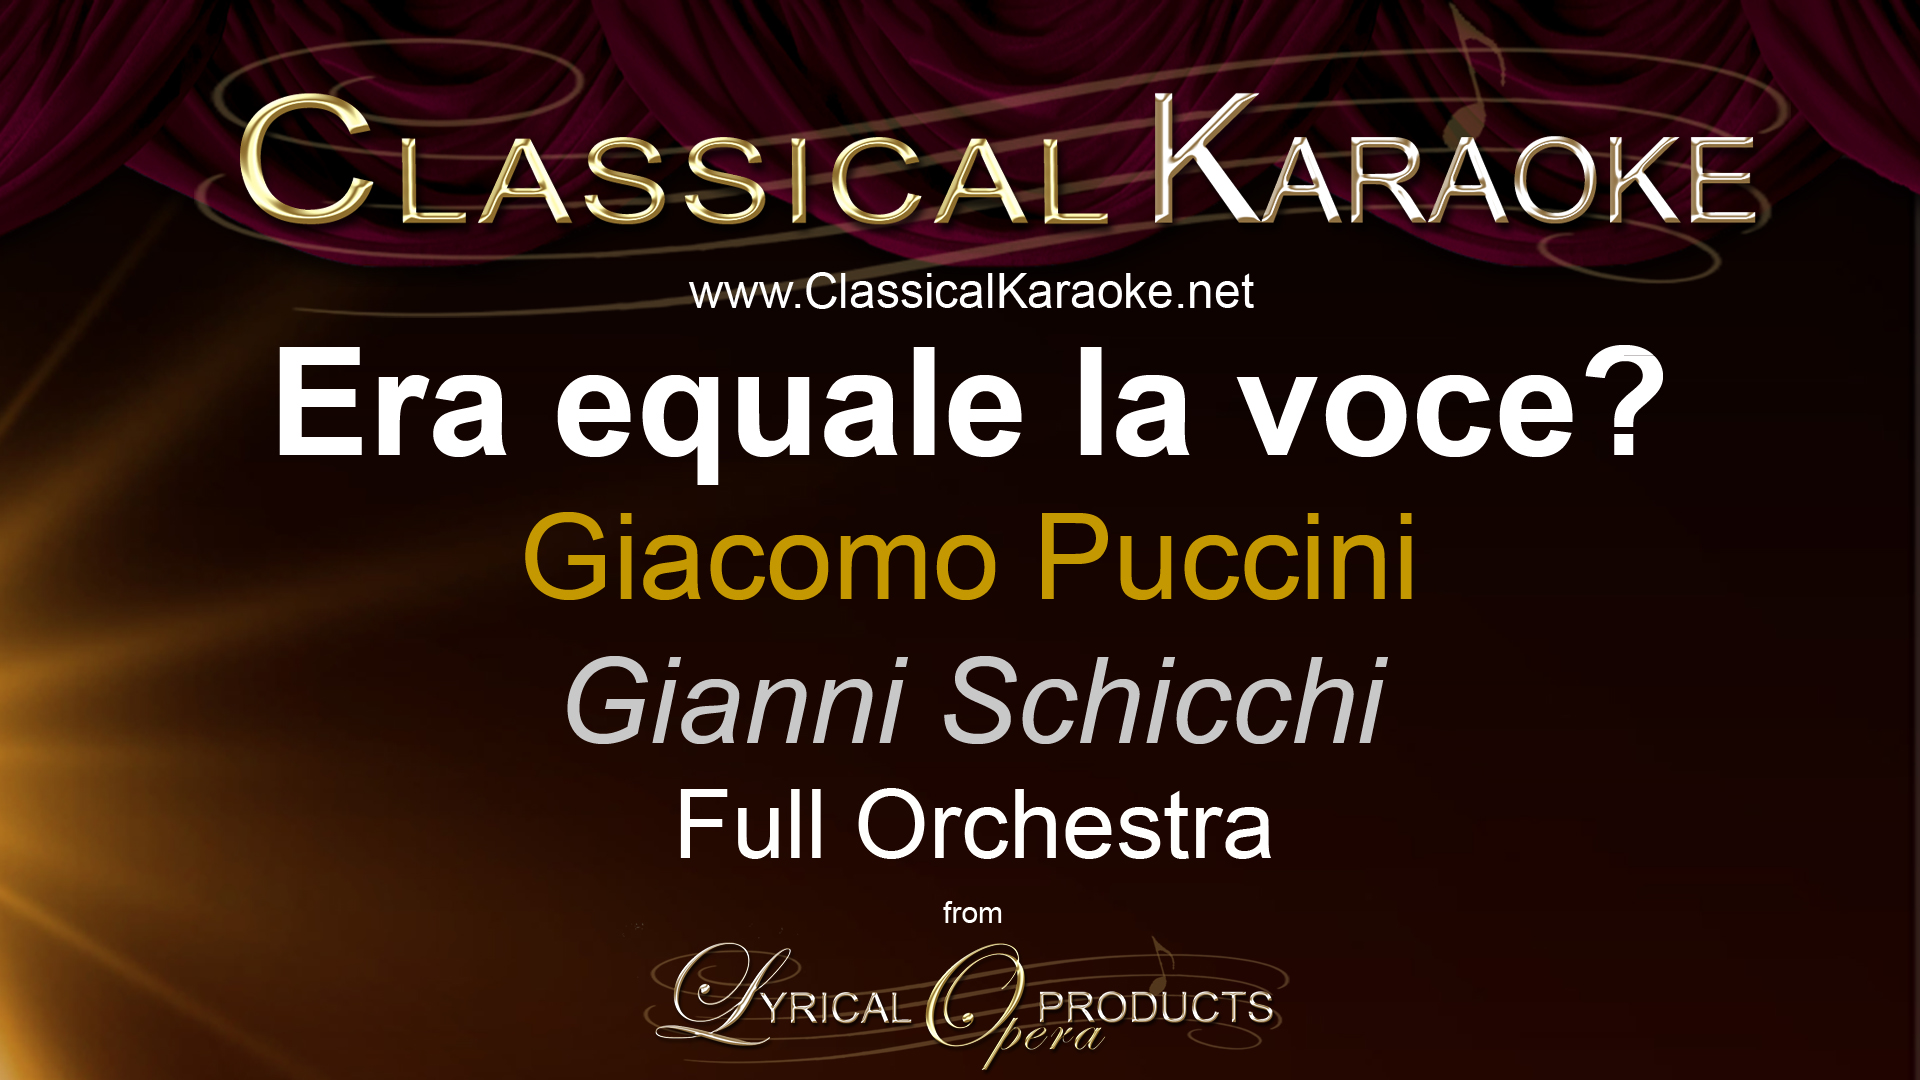 Era equale la voce?, from Gianni Schicchi, Full Orchestral Accompaniment (karaoke) track